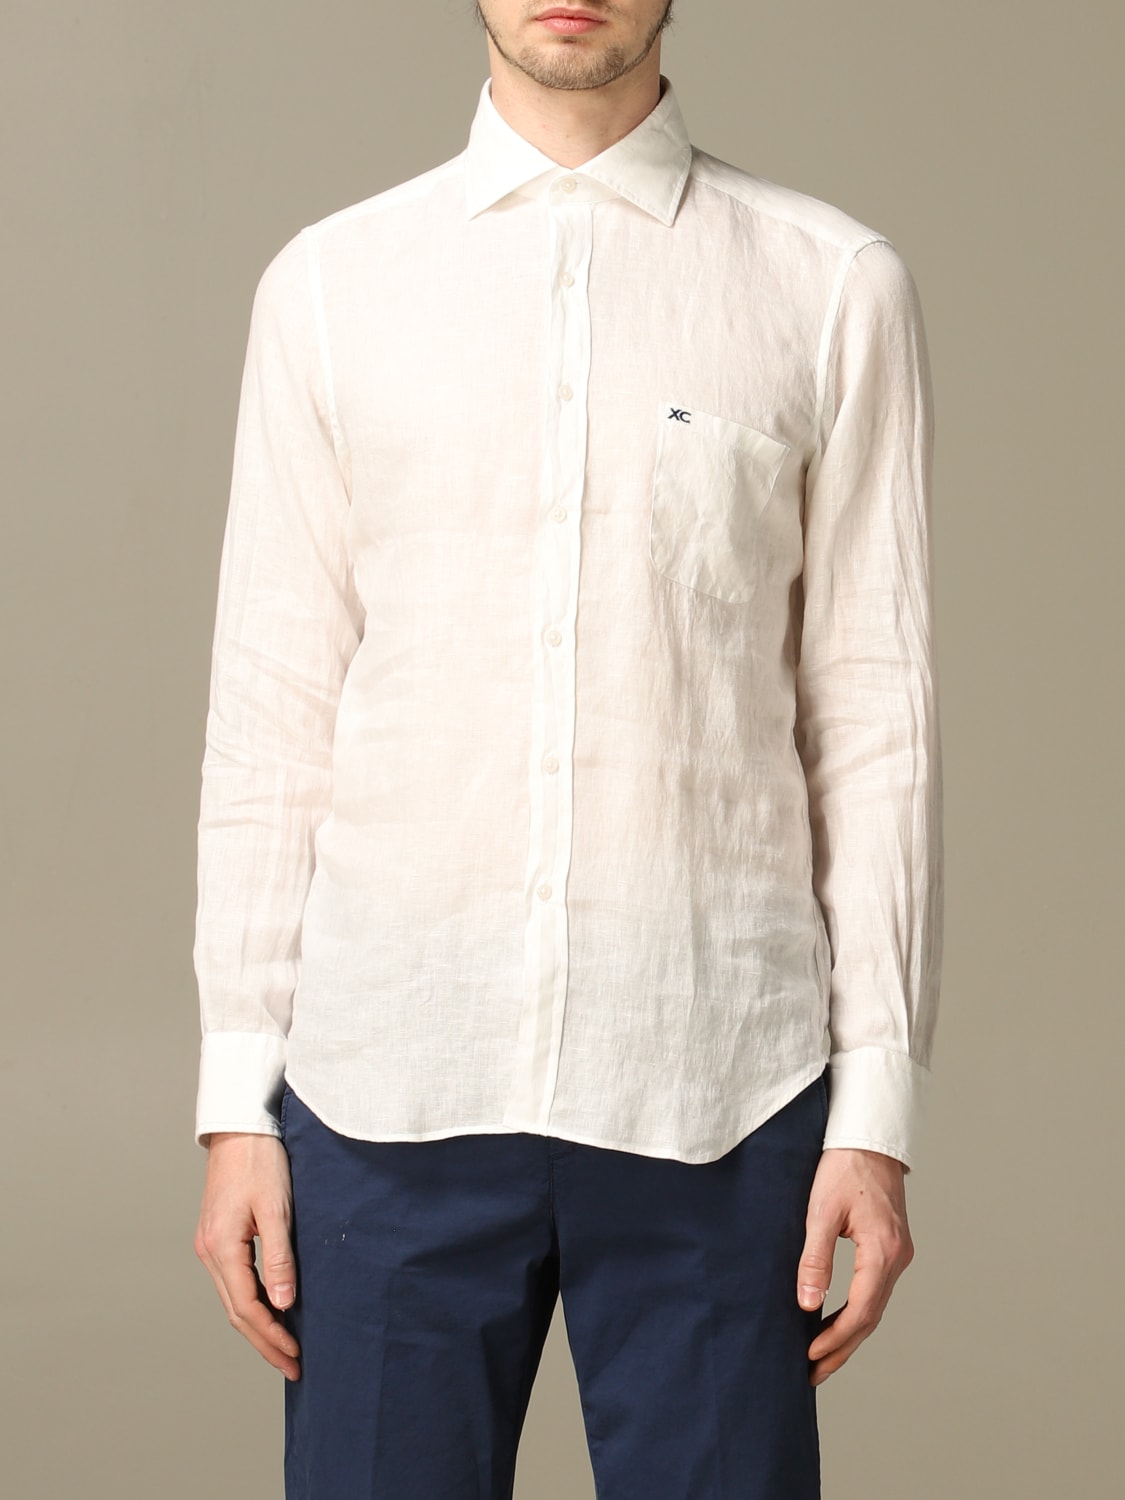 Xc -  linen shirt with Italian collar